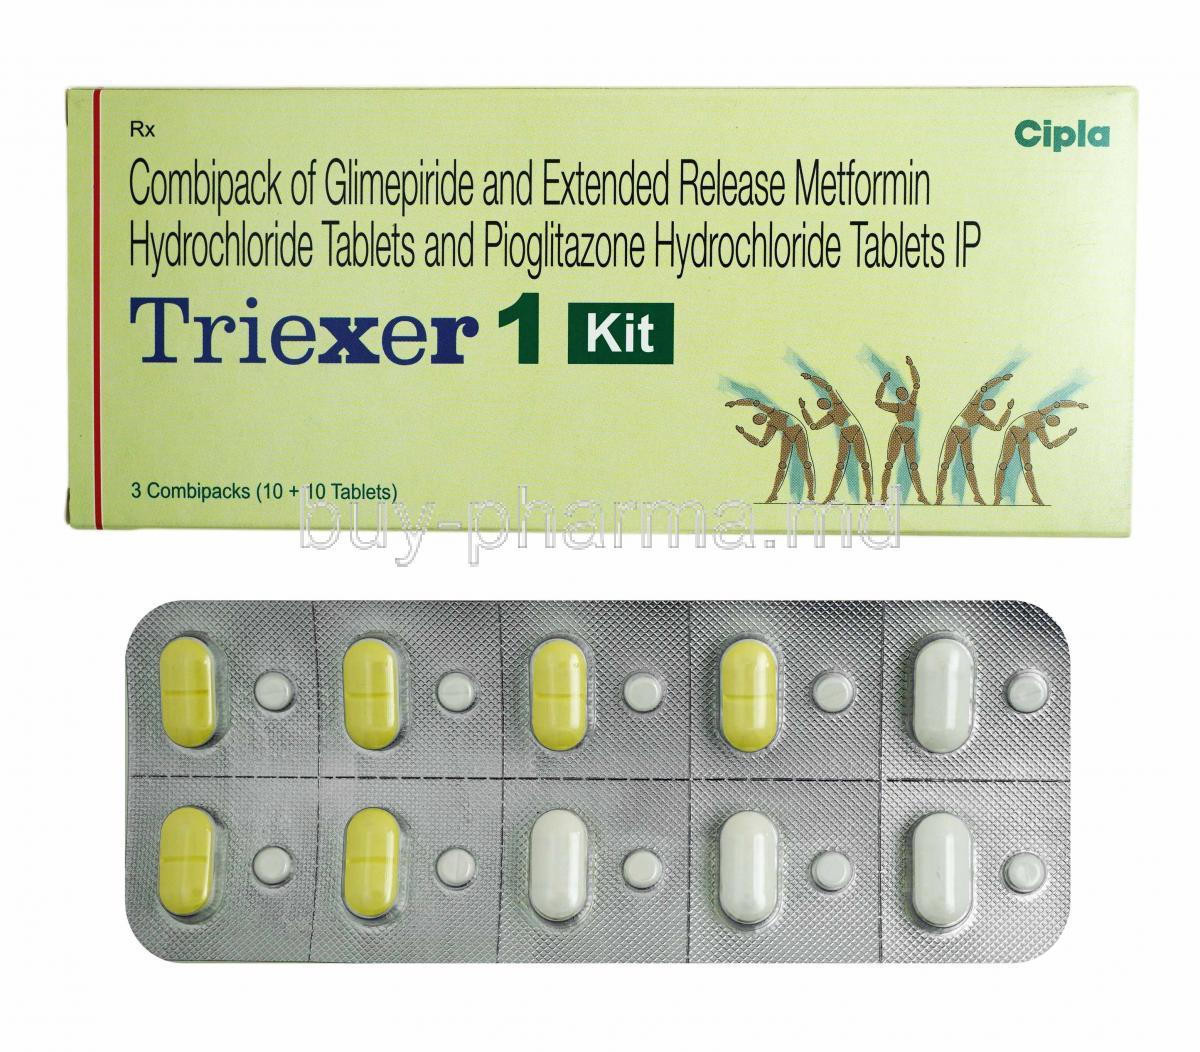 Triexer Kit, Glimepiride 1mg, Metformin 500mg and Pioglitazone 15mg box and tablets